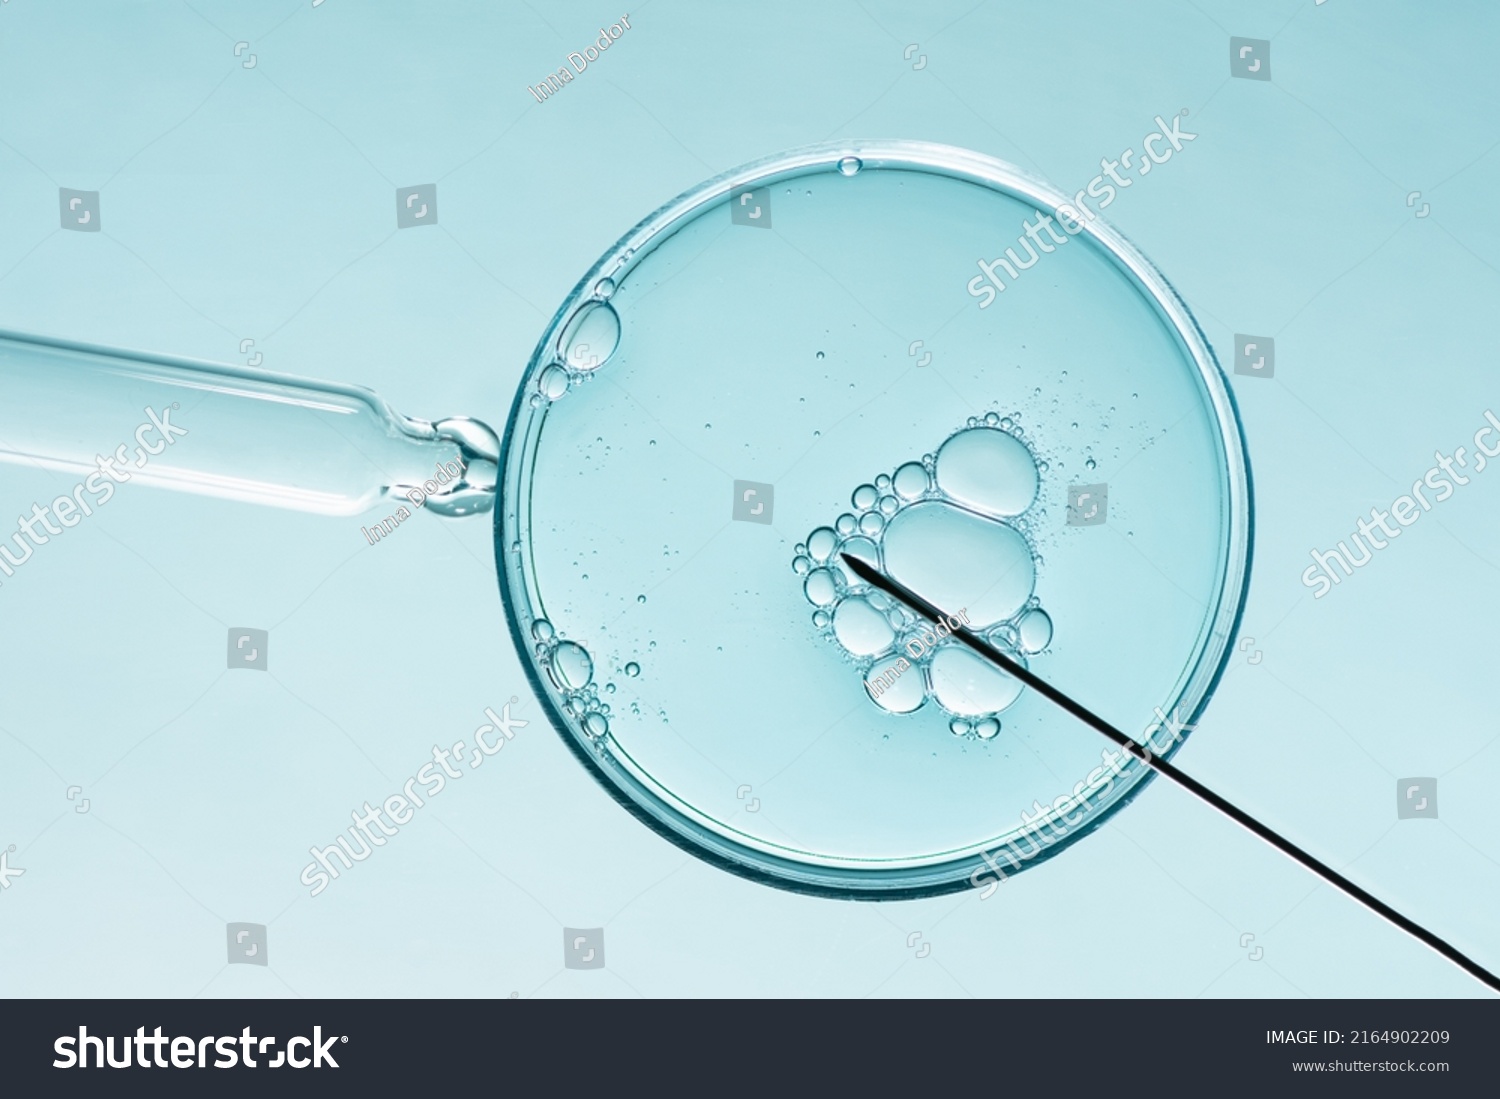 In vitro fertilisation concept. Artificial insemination or fertility treatment macro photography.  #2164902209